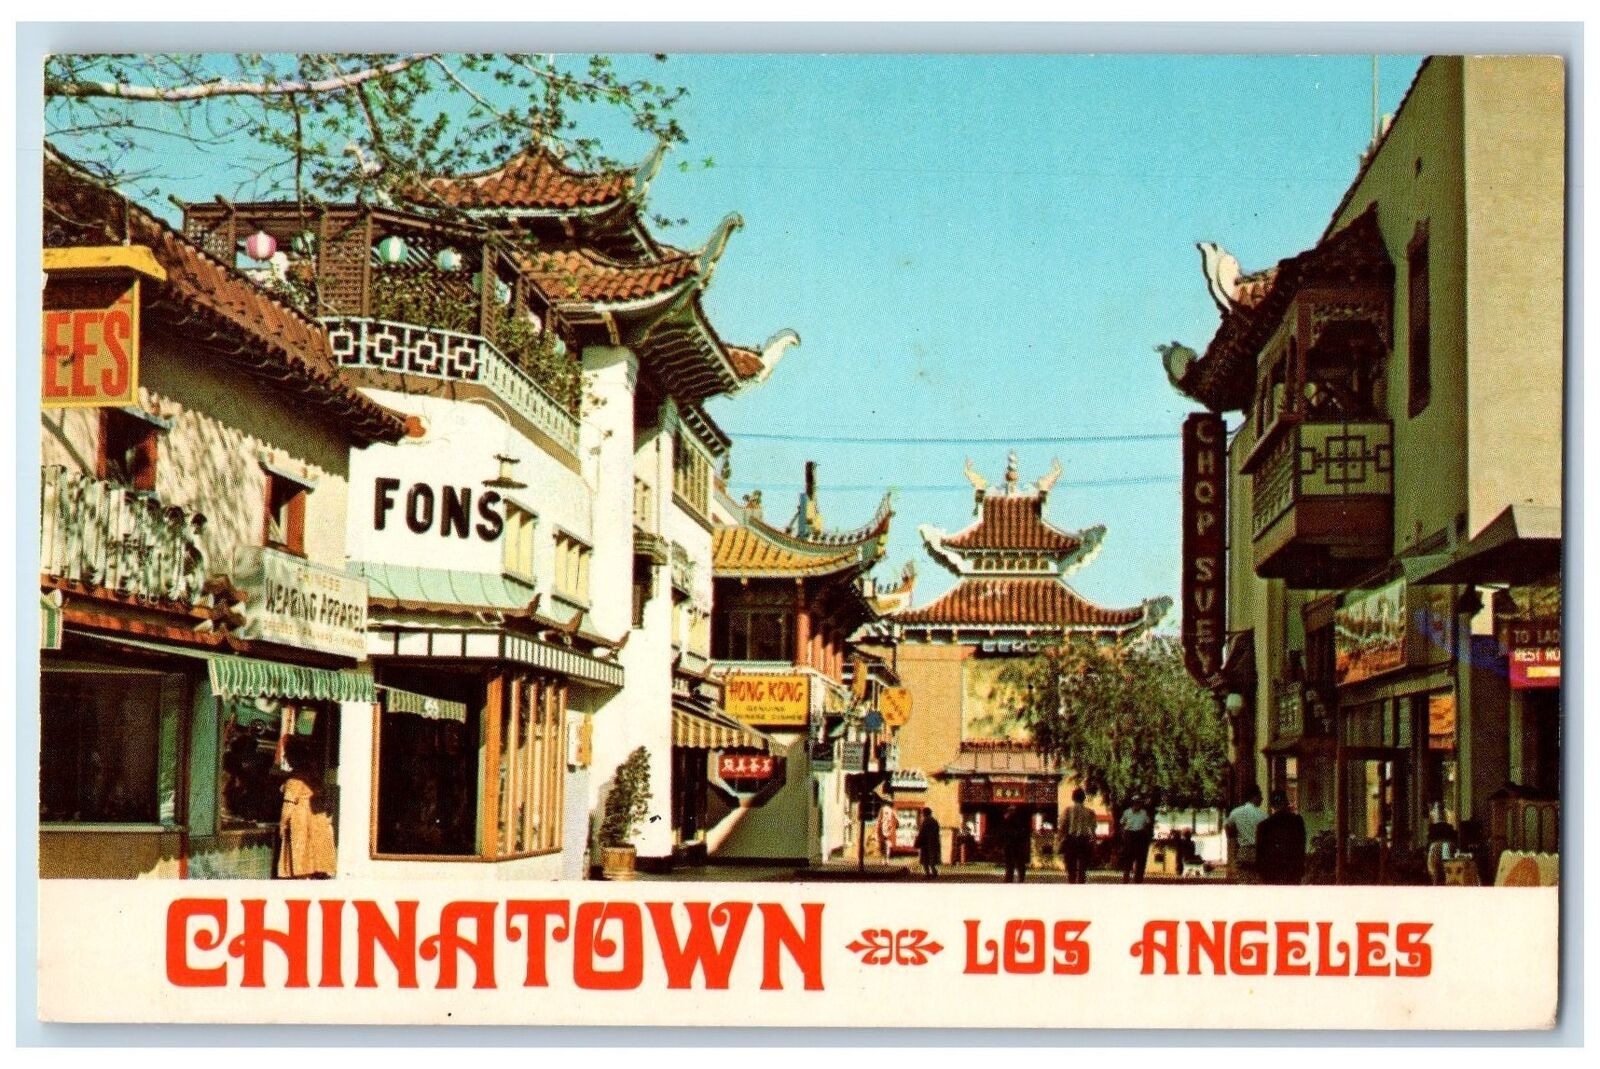 c1950's Chinatown Shops Cafes Golden Palace Restaurant Los Angeles CA Postcard